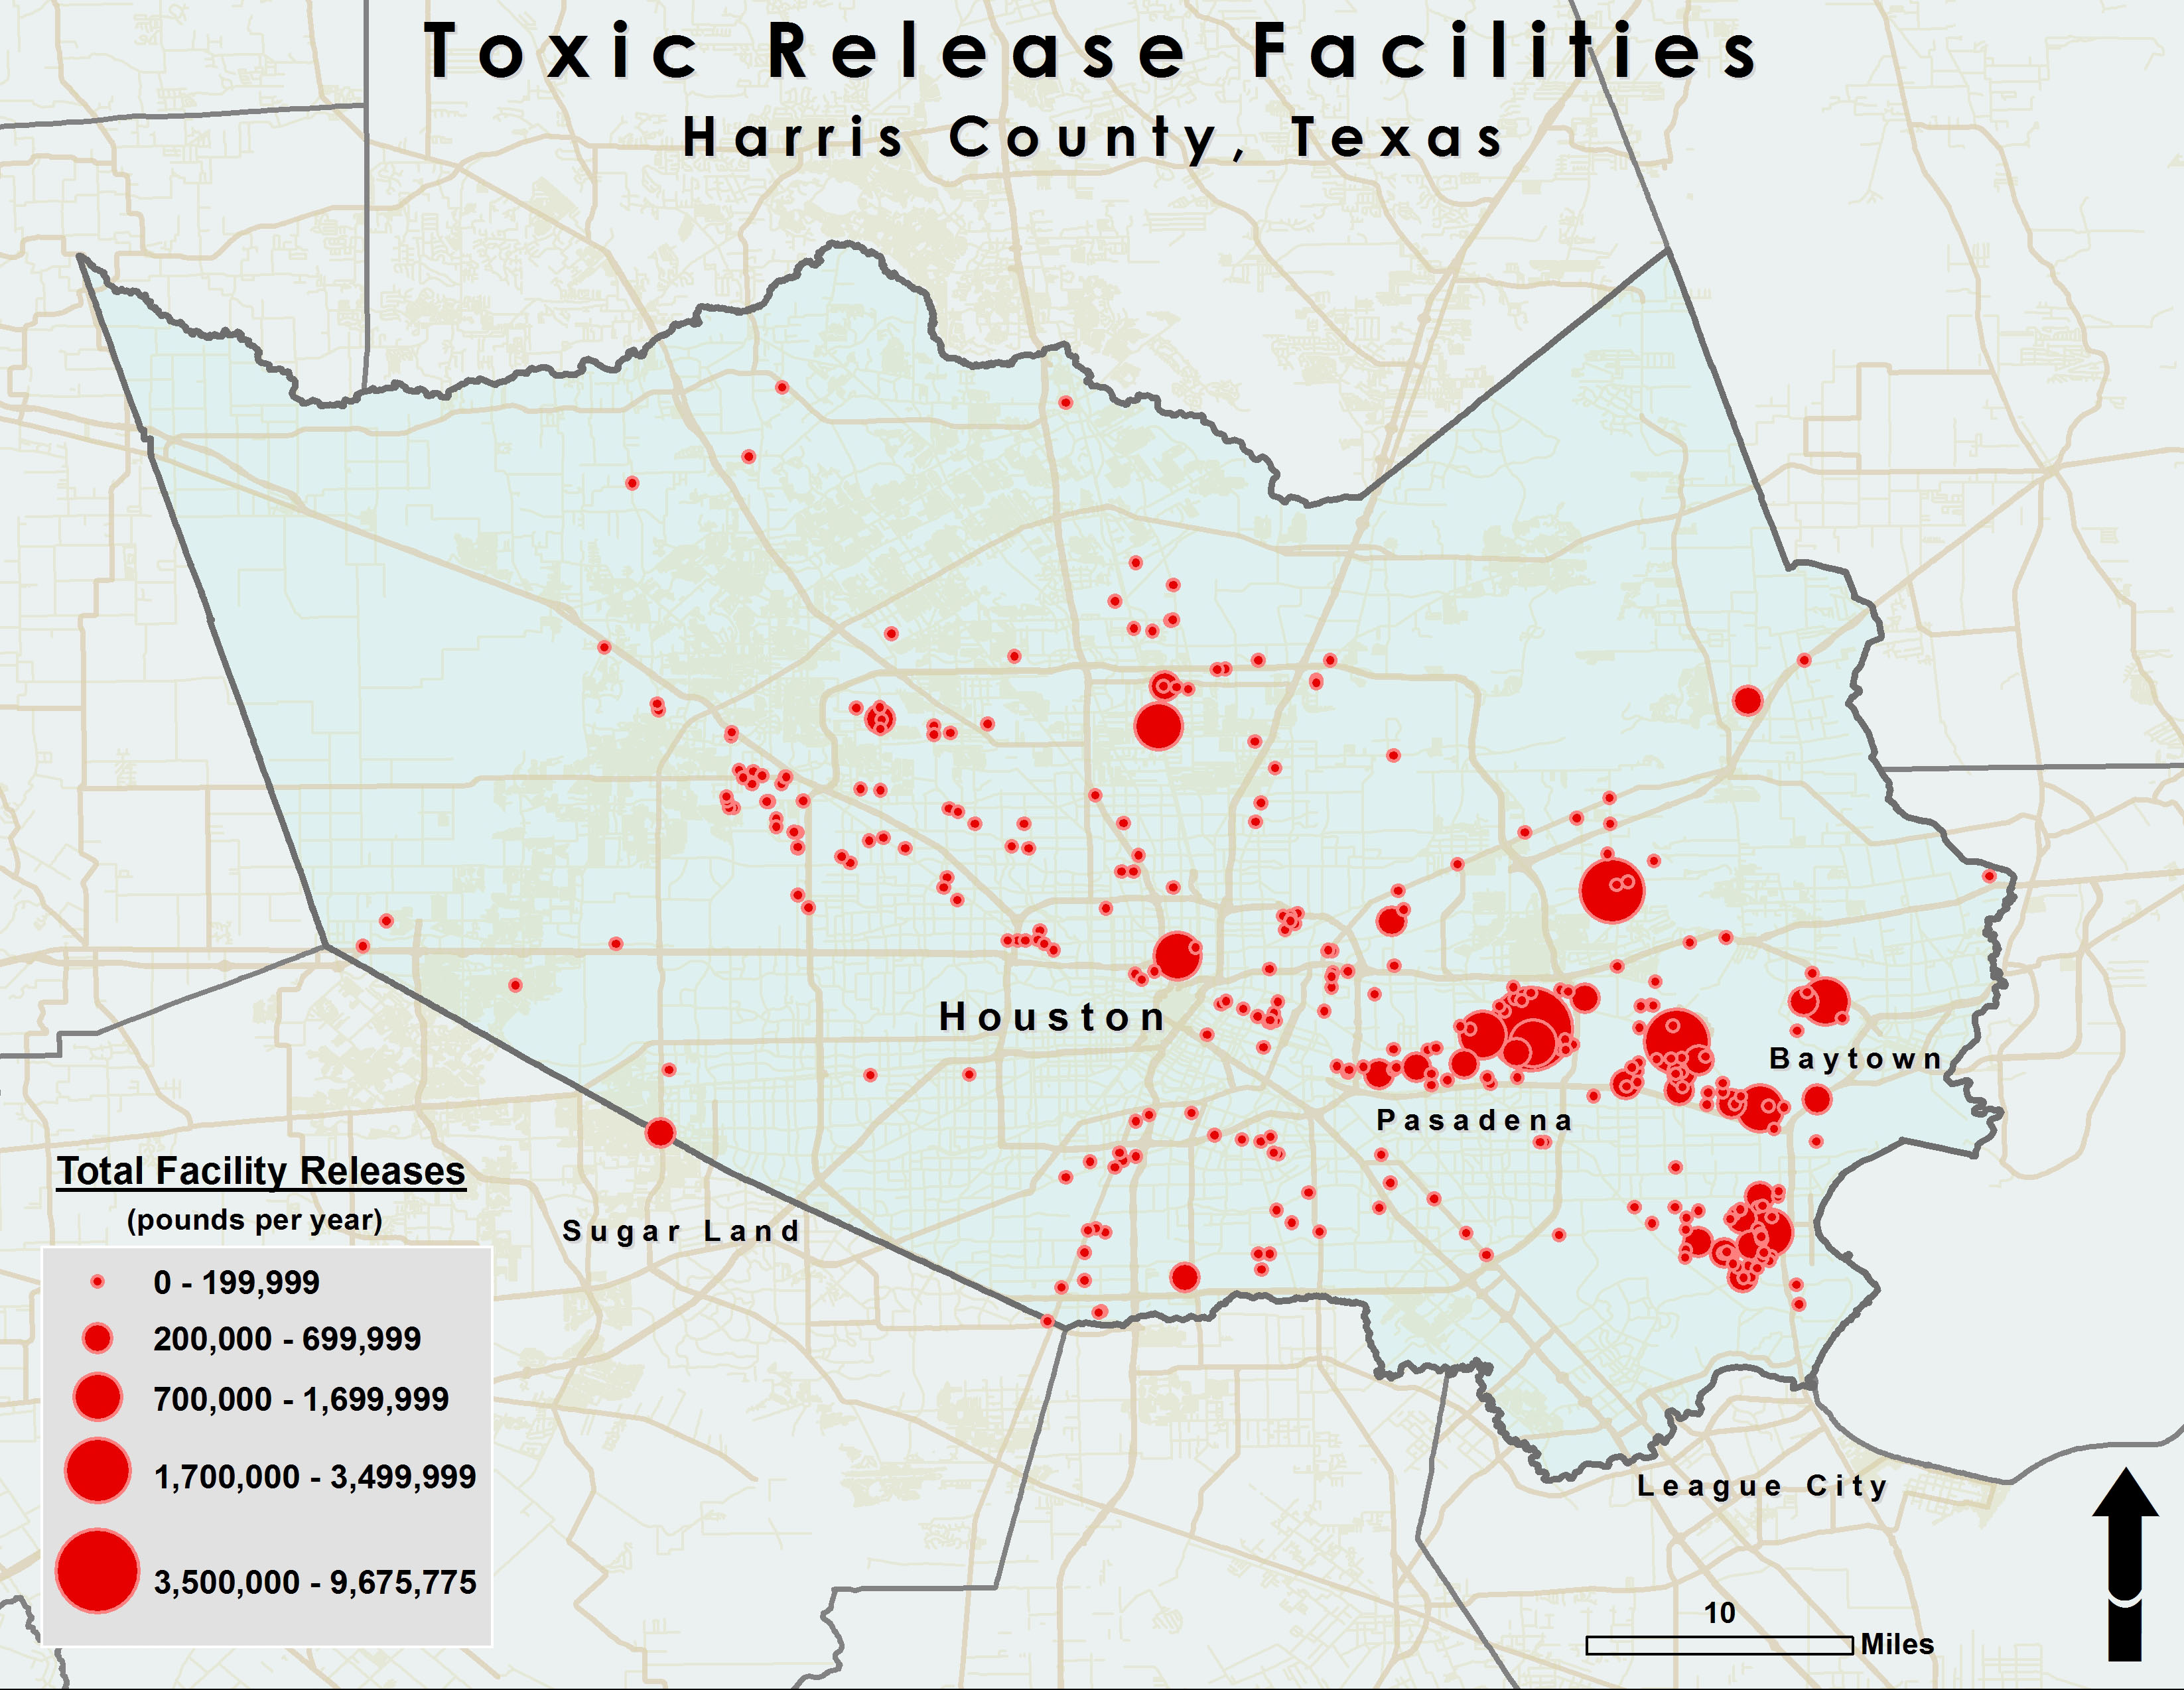 Toxic Release Facilities